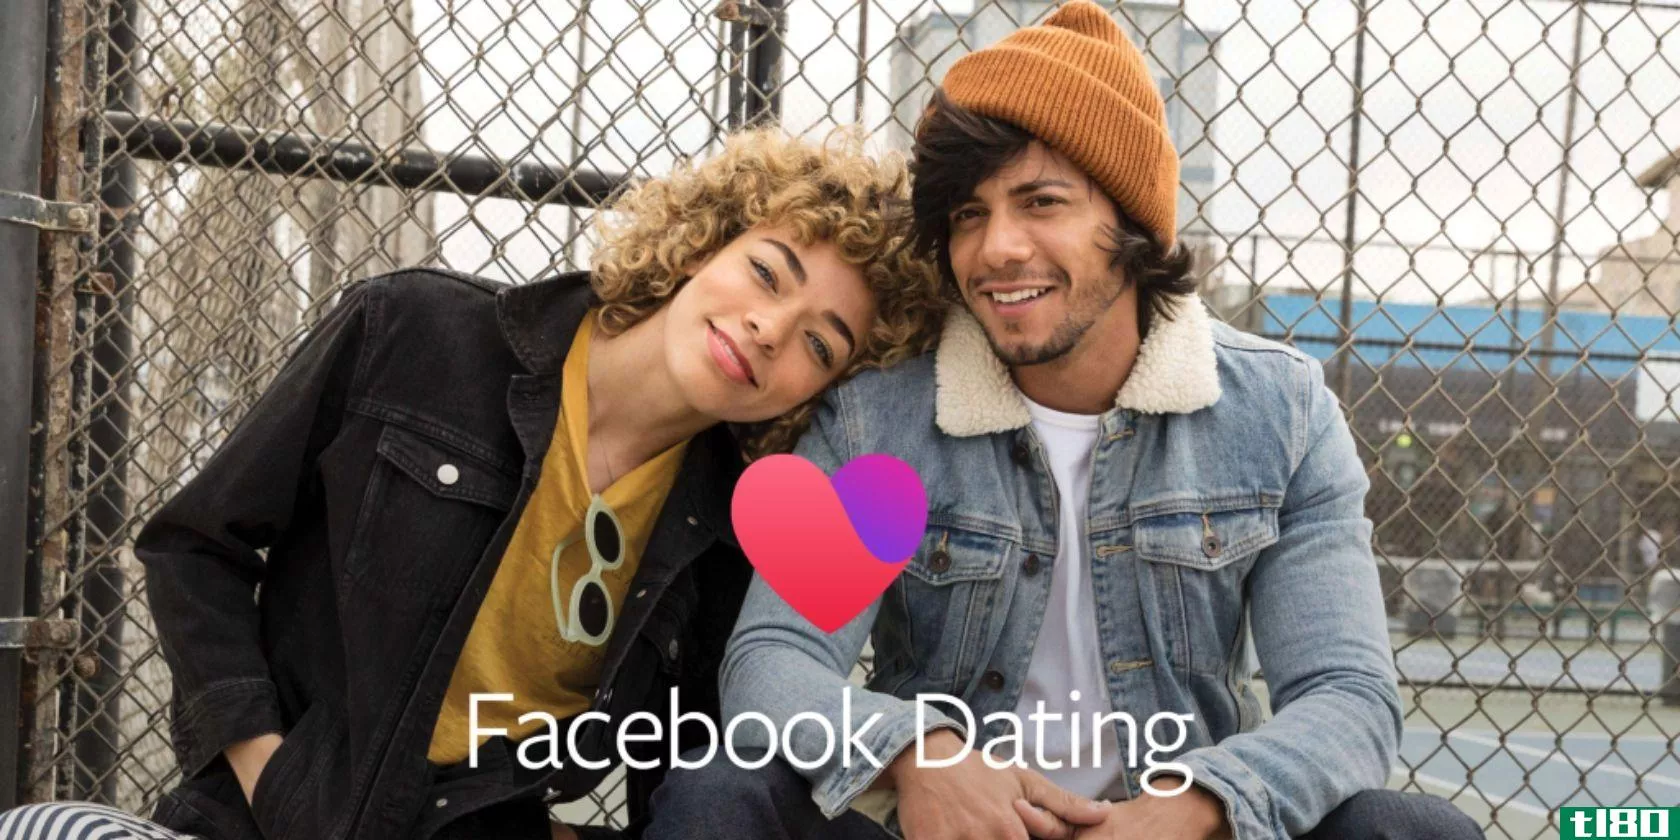 facebook-dating-promo